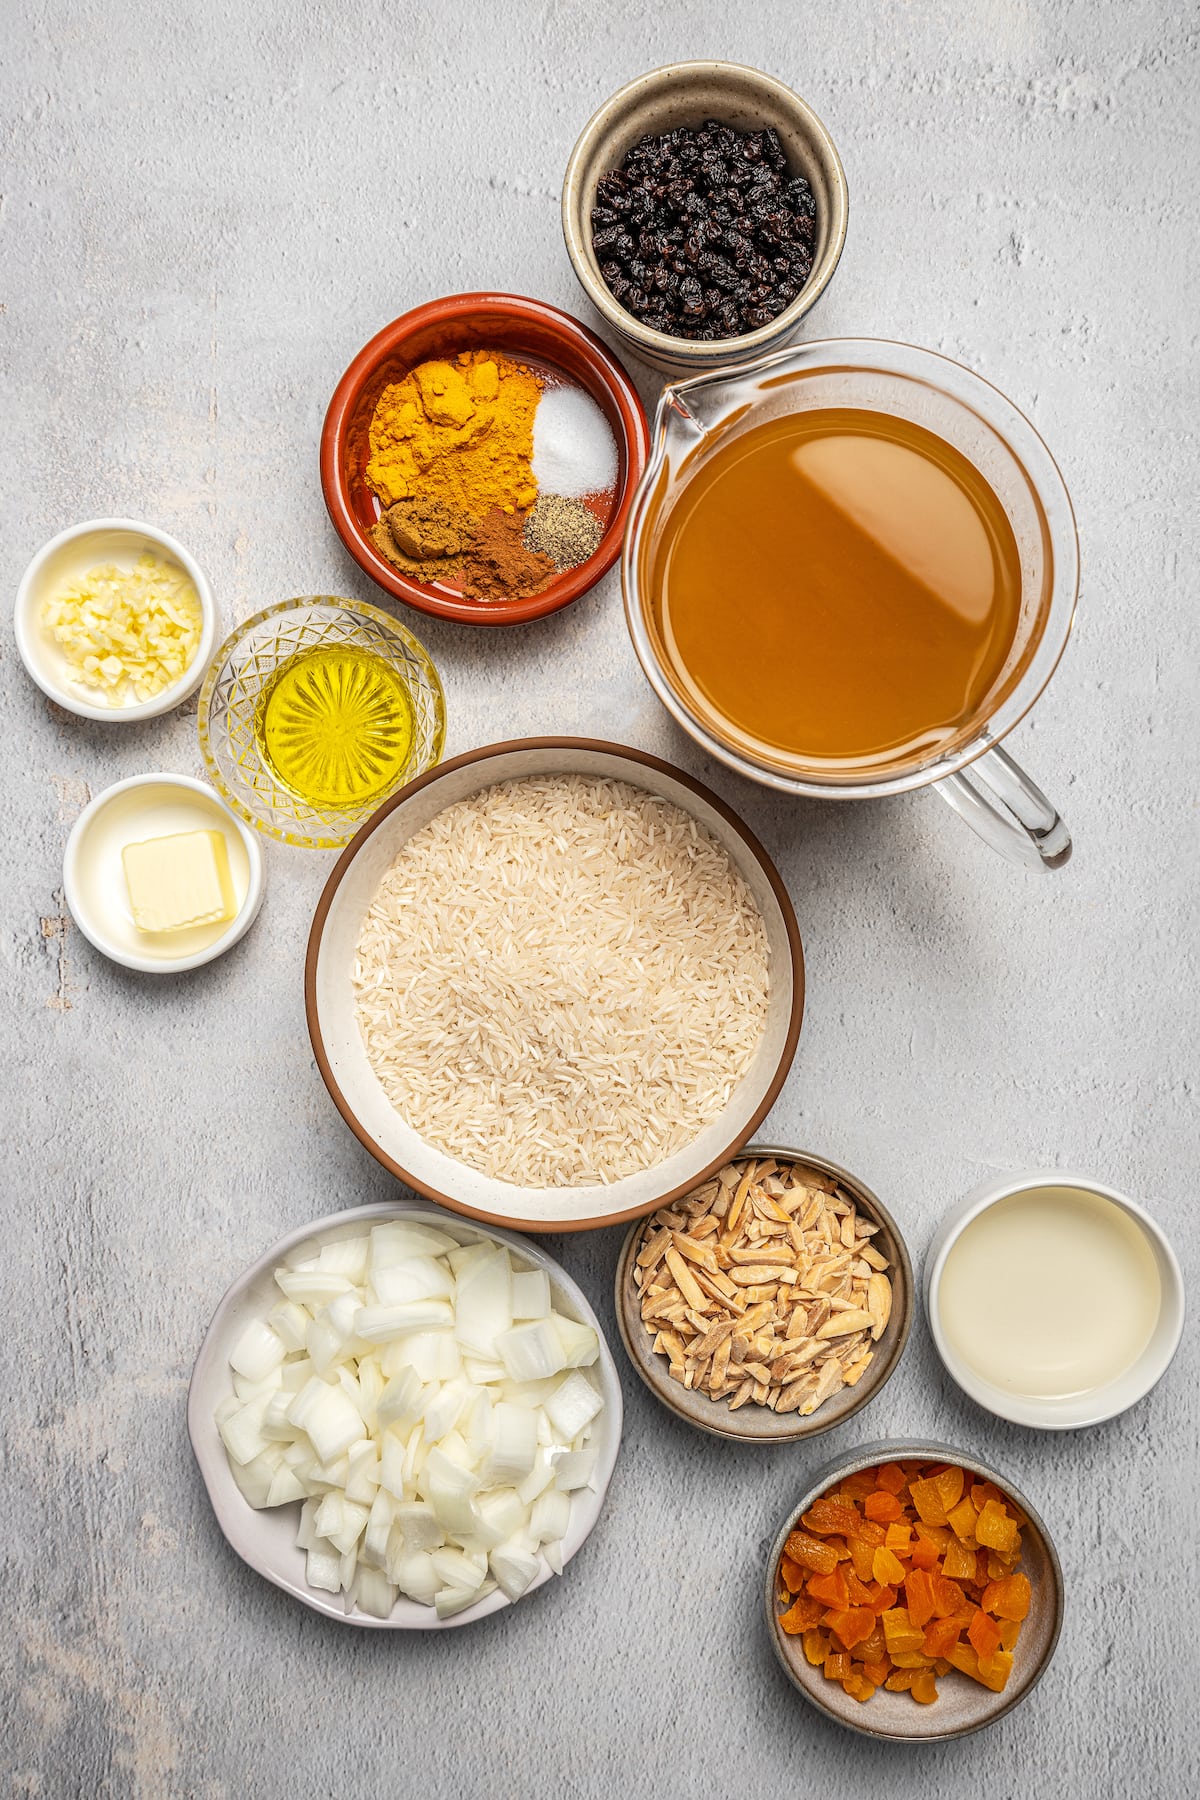 Ingredients for Mediterranean rice.